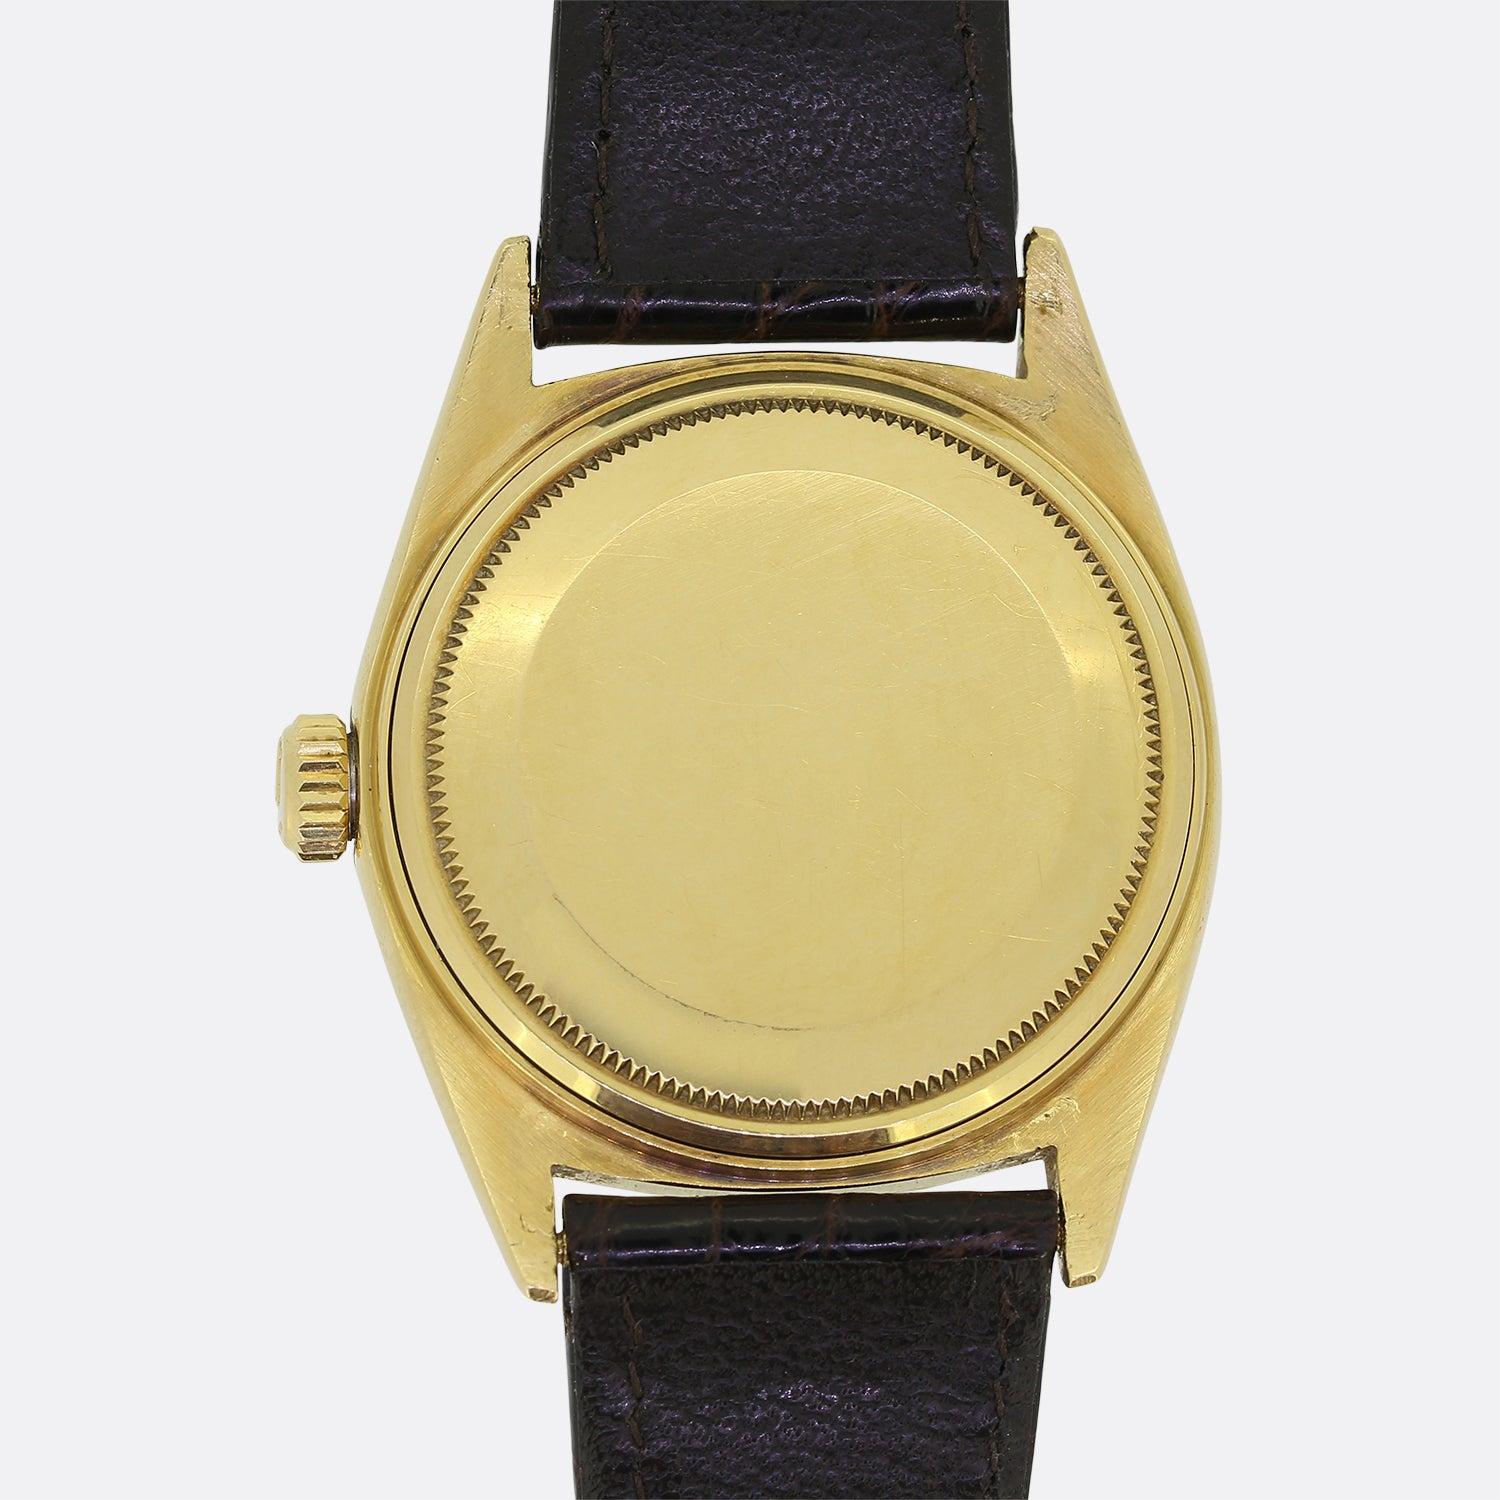 Rolex Vintage Day-Date Automatic Wristwatch 1